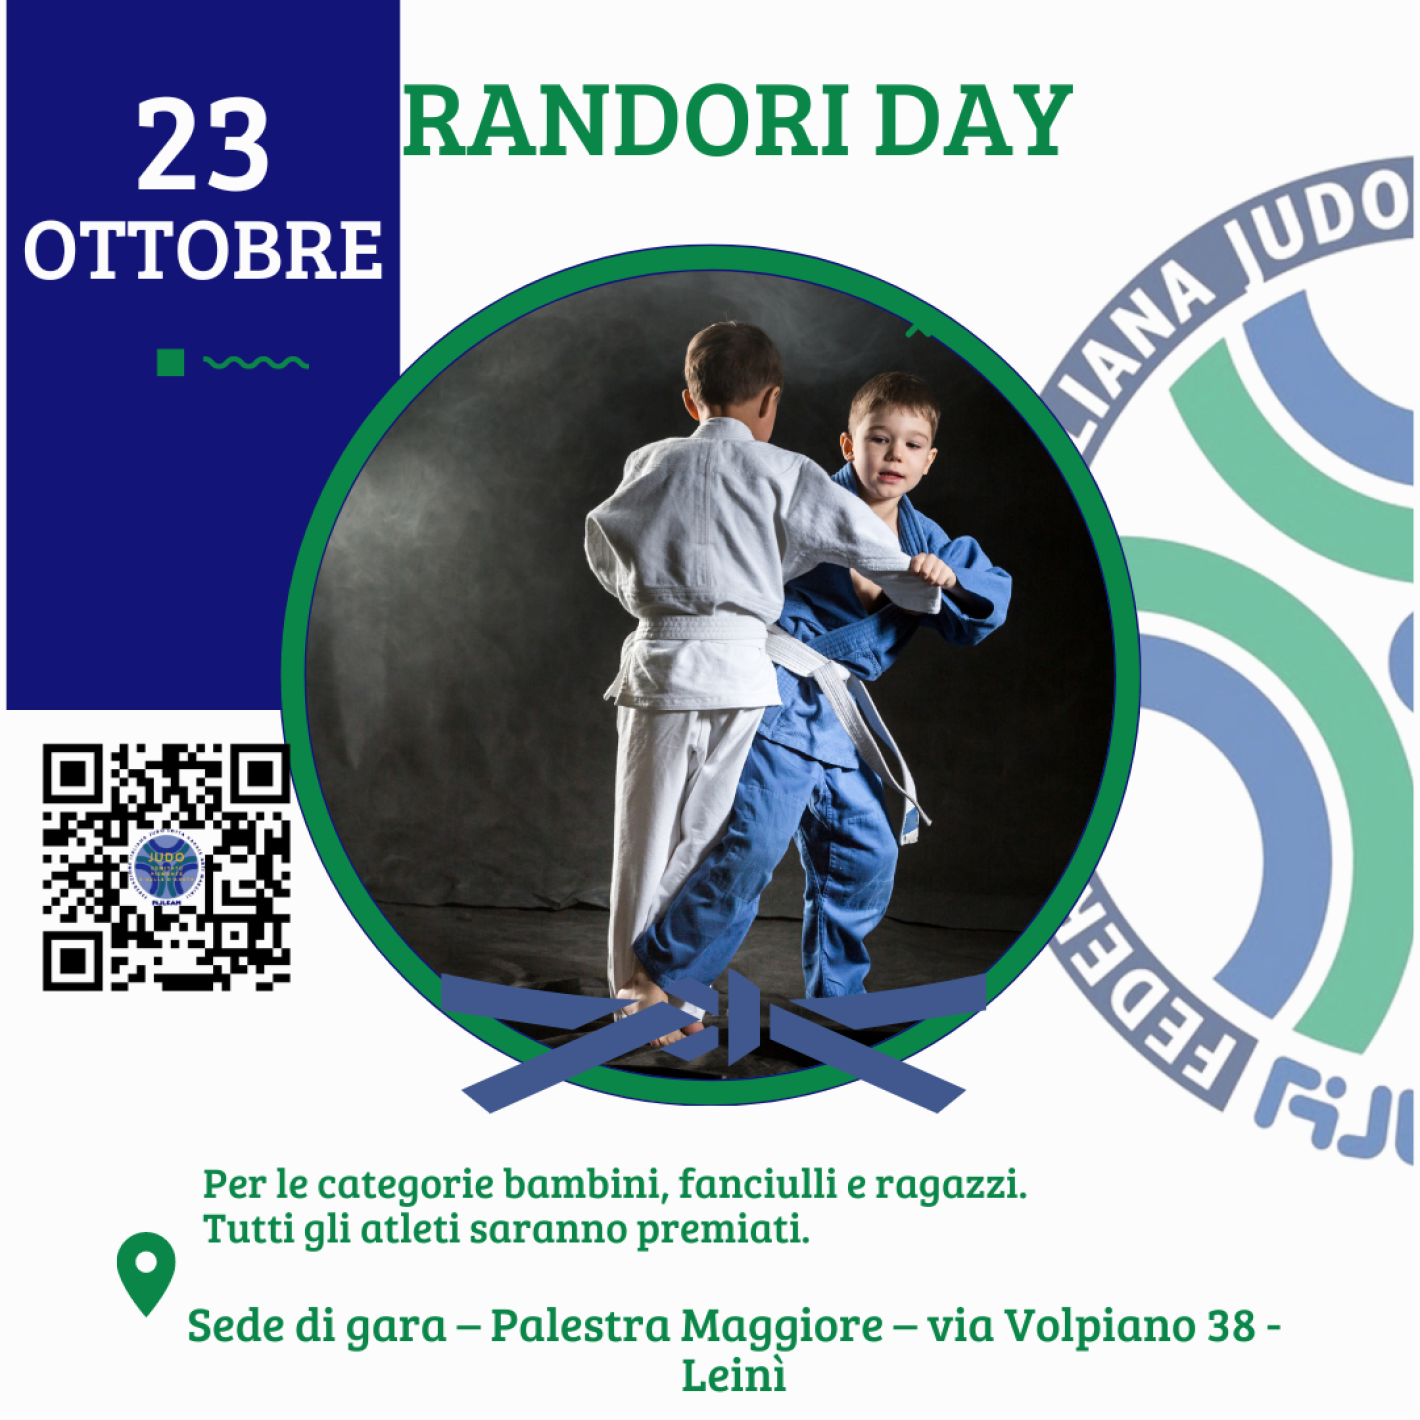 images/piemonte_aosta/Judo/medium/randori_day_1_insta_.png